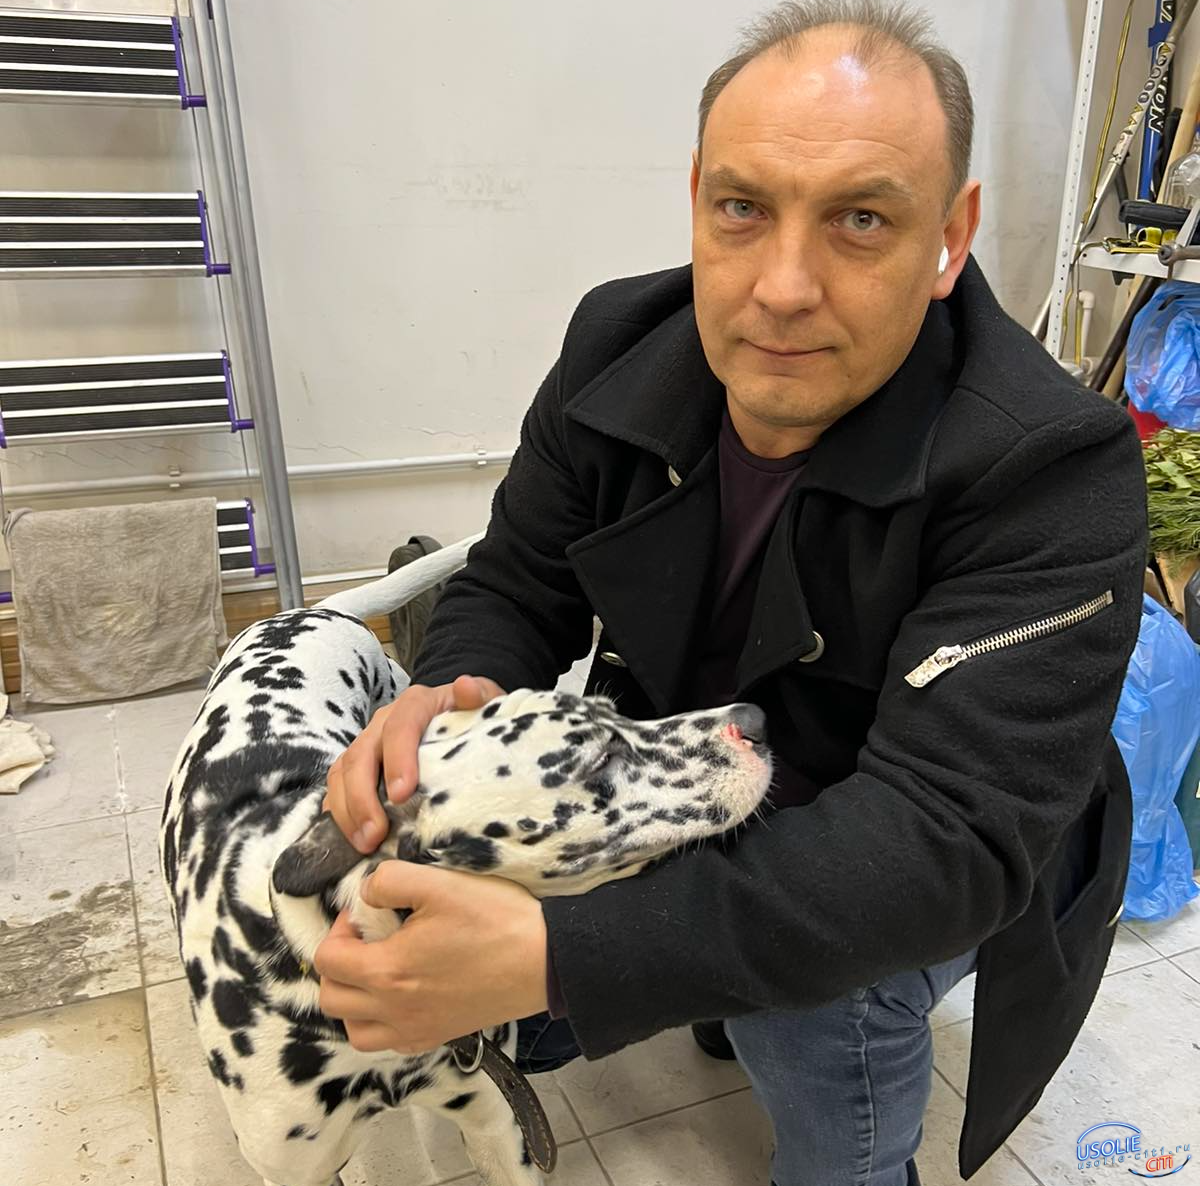 Мэр Усолья спас далматинца от разъяренных собак